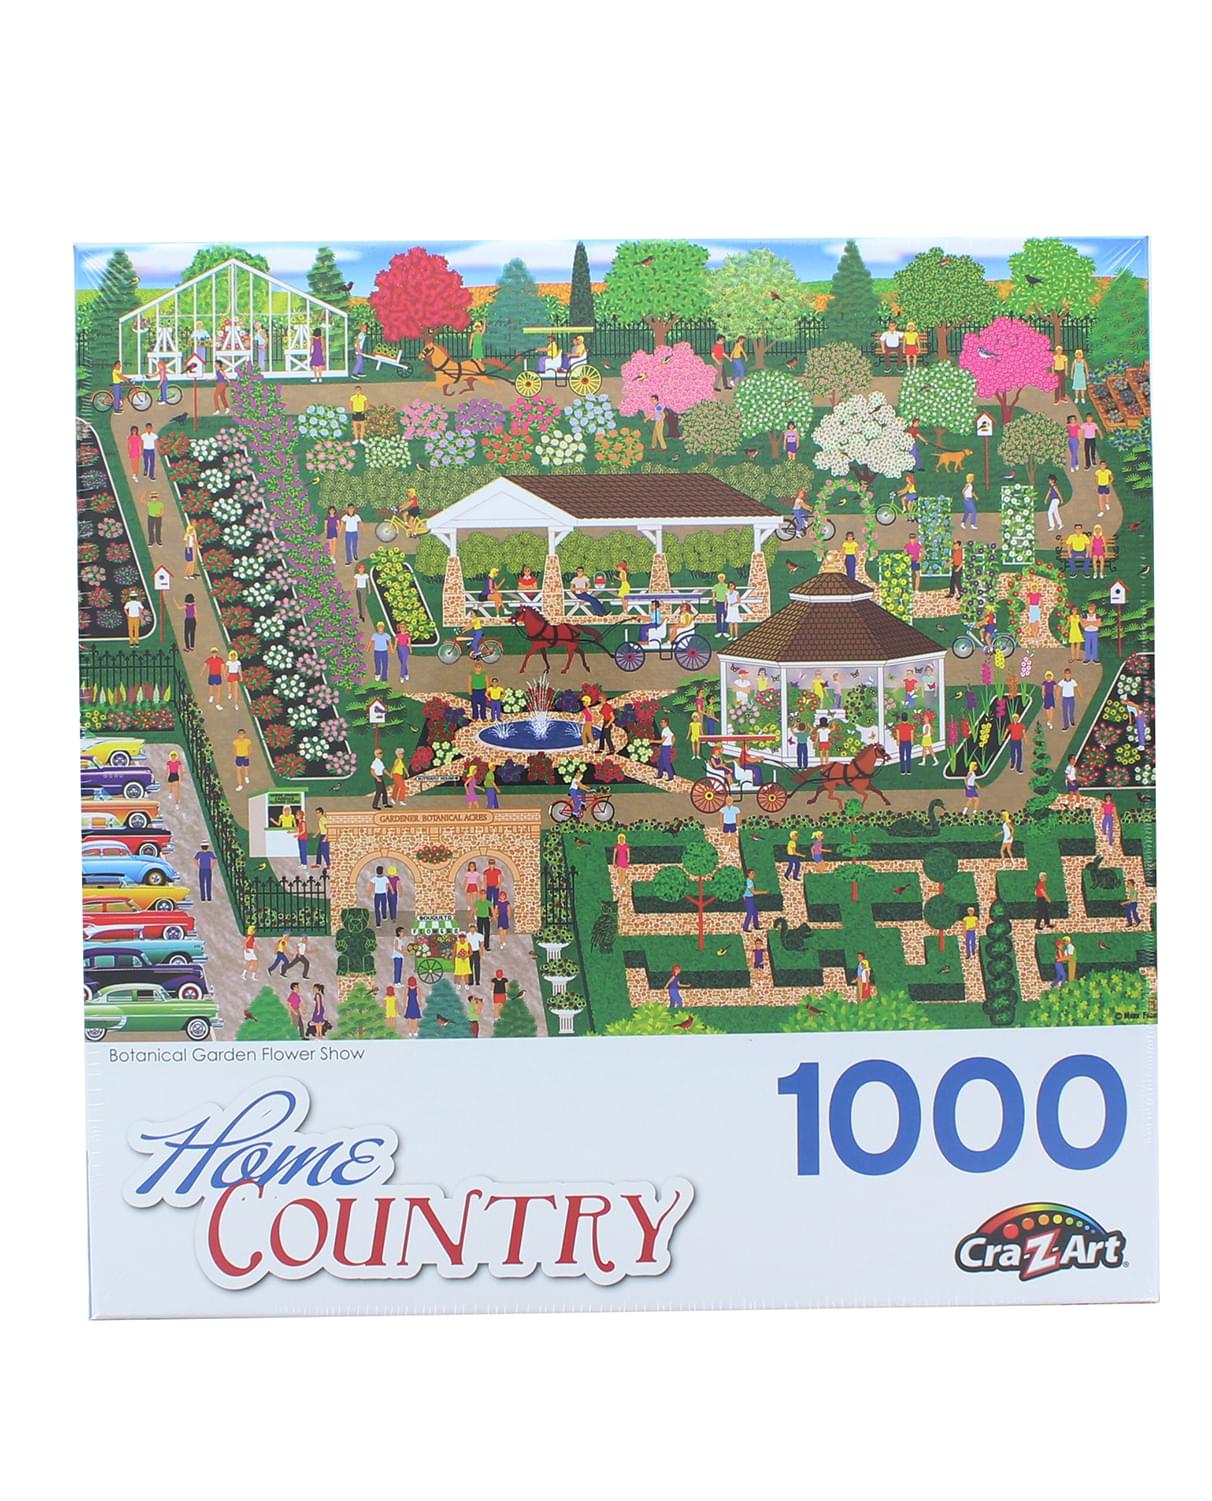 Botanical Garden Flower Show 1000 Piece Jigsaw Puzzle